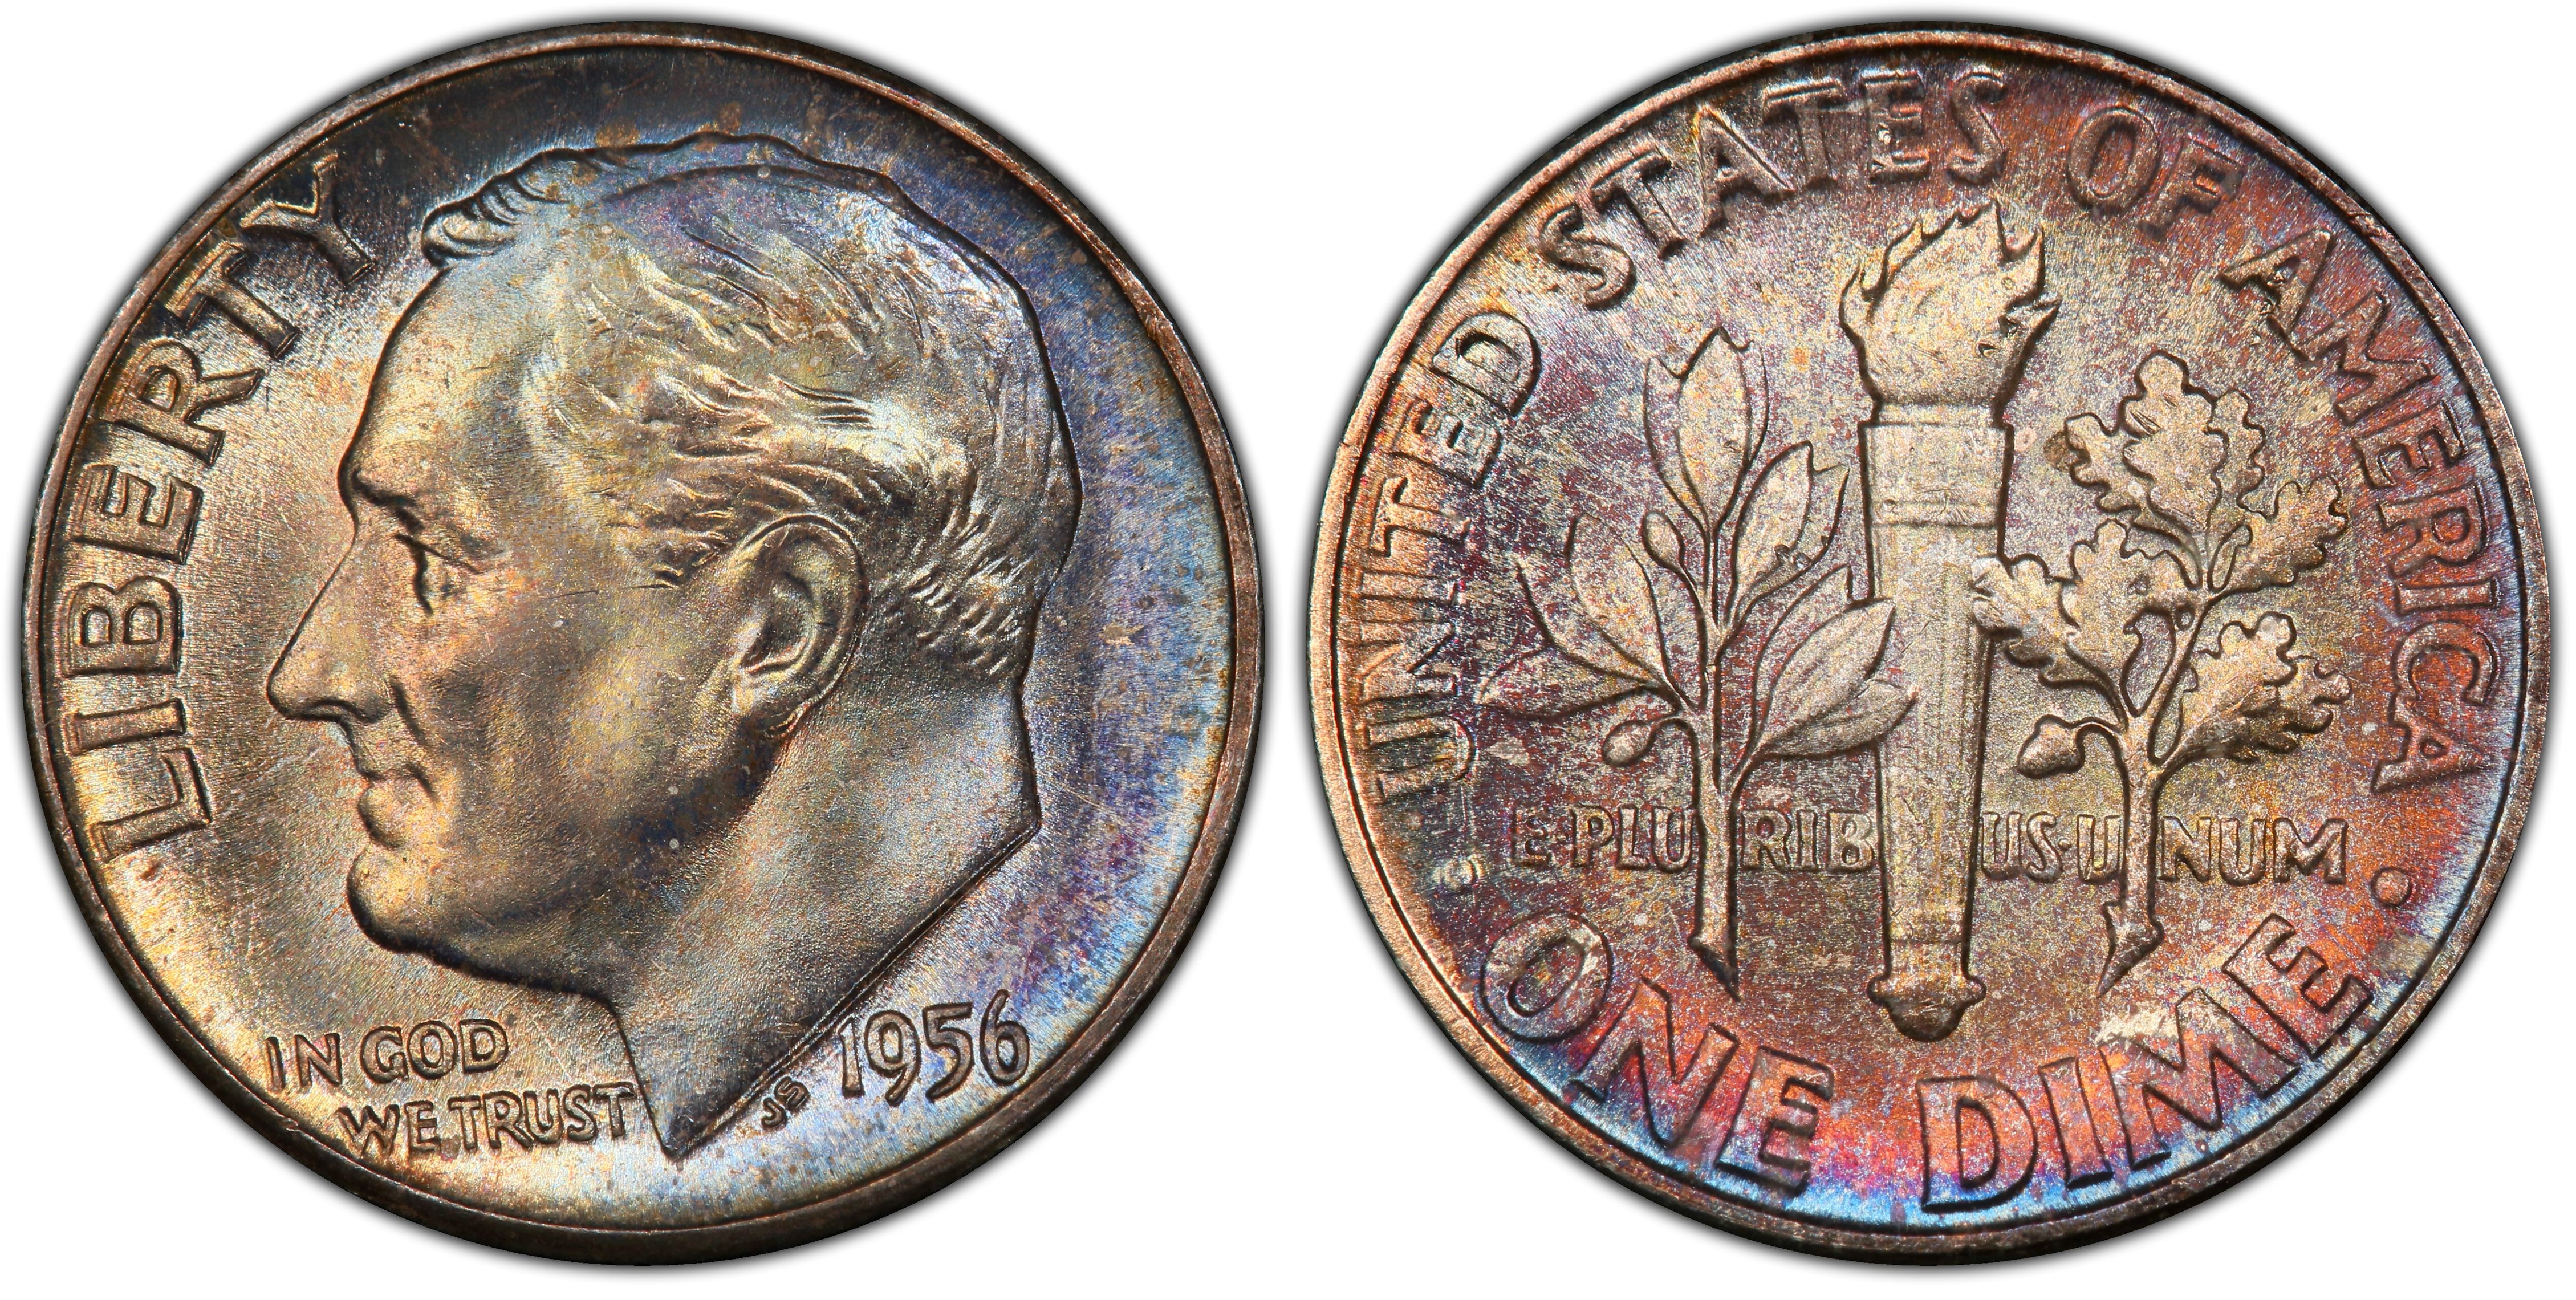 USA 10 Cents = 1 Dime 1956 *197 KM195 Roosevelt Dime. 721.0482.13 VF